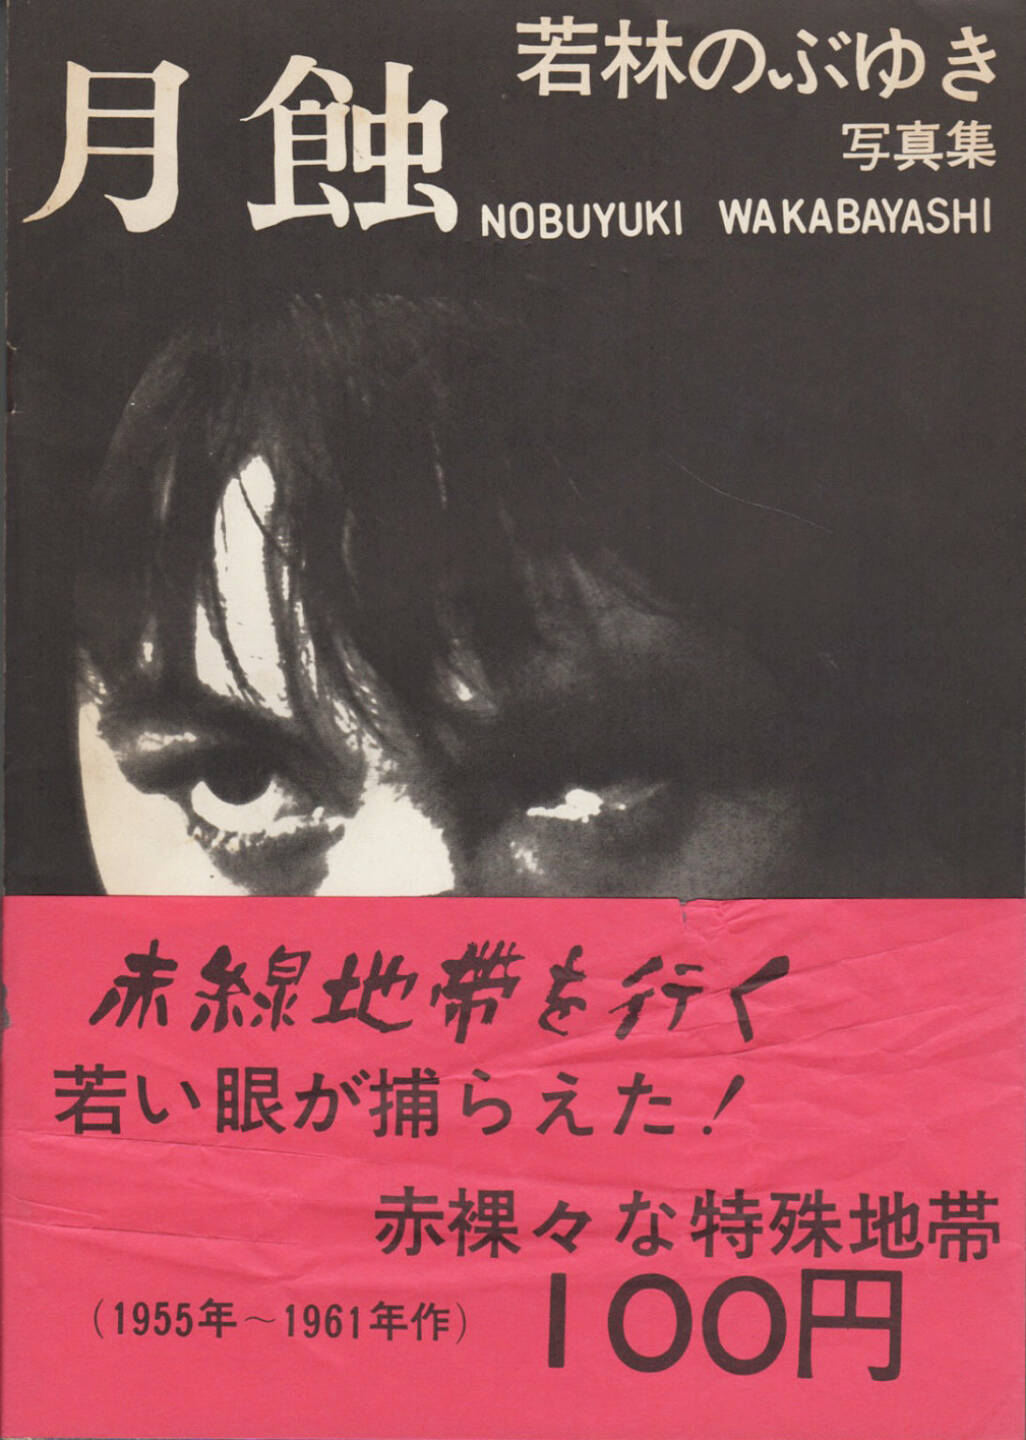 Nobuyuki Wakabayashi - Gesshoku - Lunar Eclipse (若林のぶゆき 月蝕), PhotoJapan 1972, Cover - http://josefchladek.com/book/nobuyuki_wakabayashi_-_gesshoku_-_lunar_eclipse_若林のぶゆき_月蝕